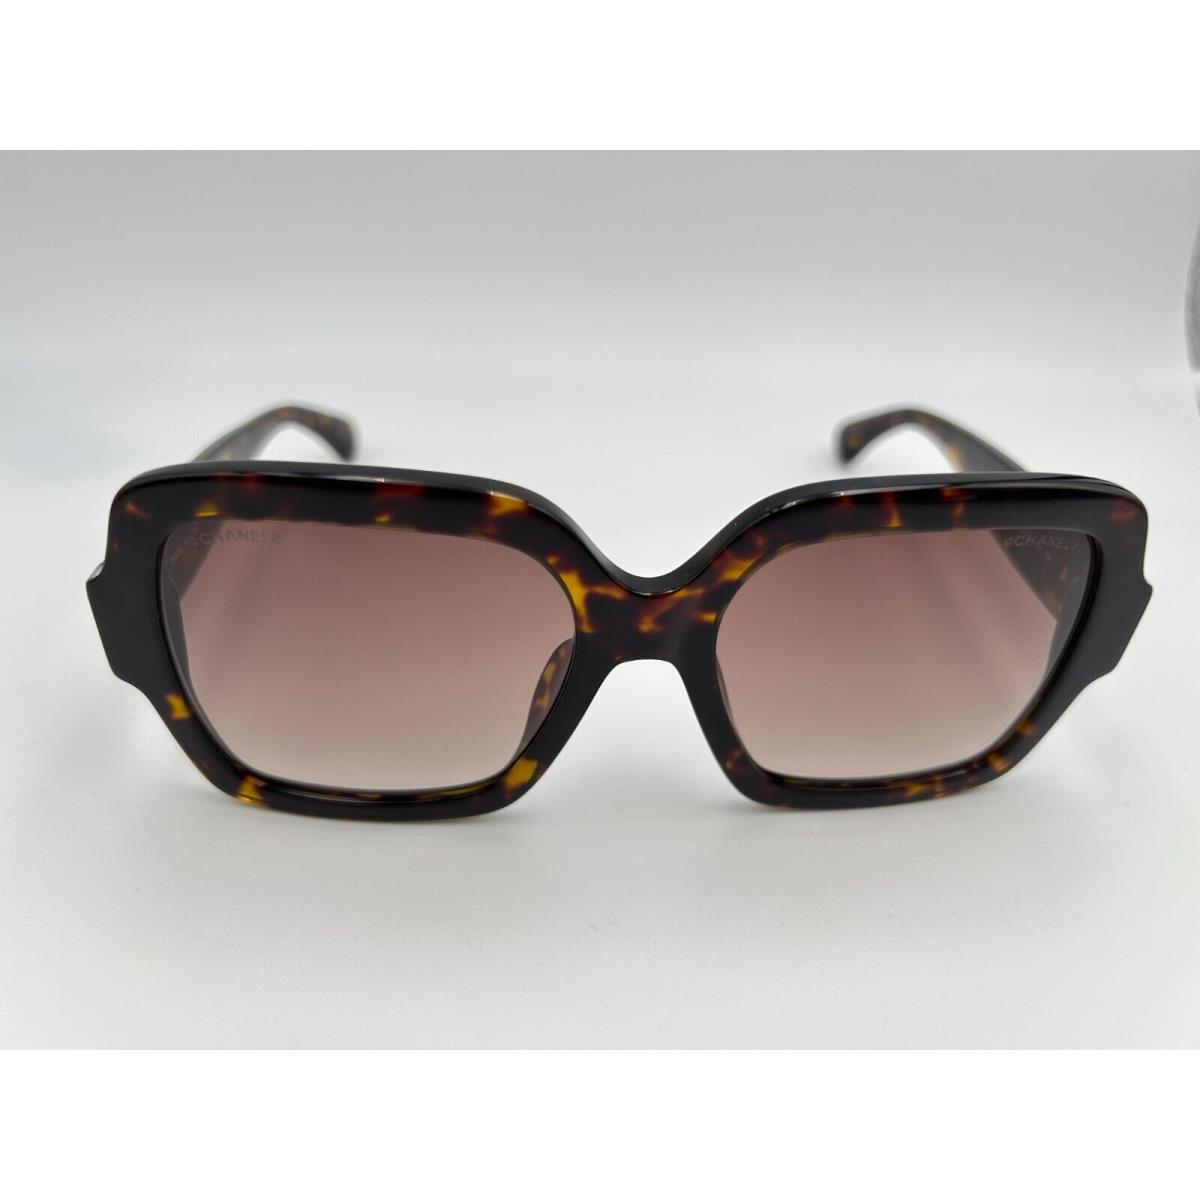 Chanel Sunglasses 5479 714/S5 Tortoise Brown Gradient Polarized CC